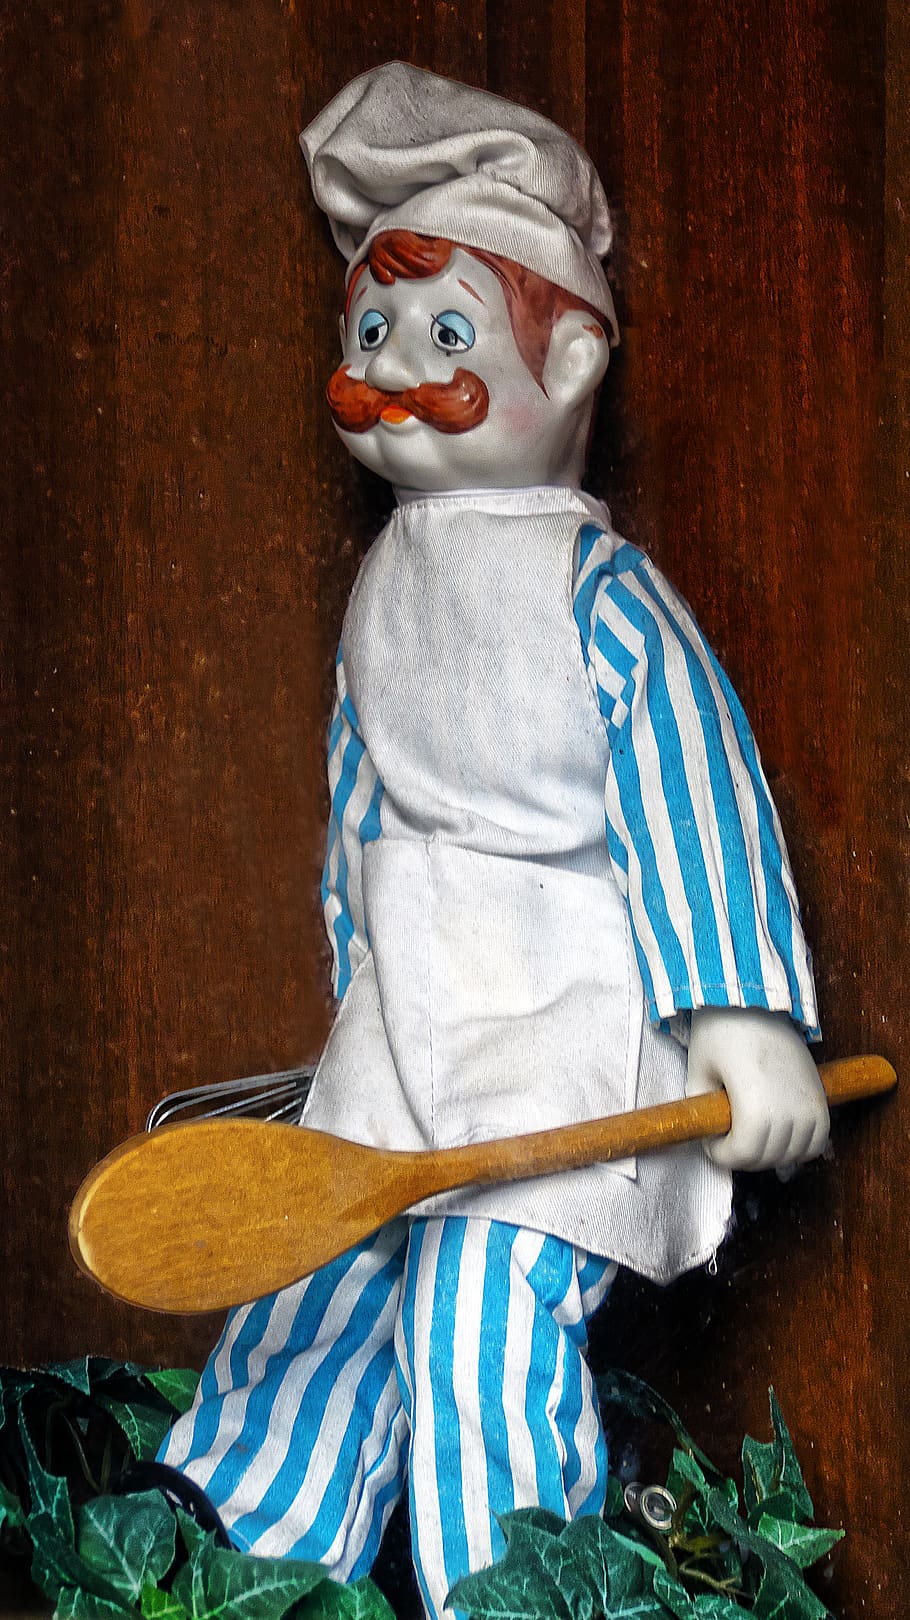 cooking, doll, wooden spoon, figure, nostalgic, old, advertising, restaurant, representation, human representation